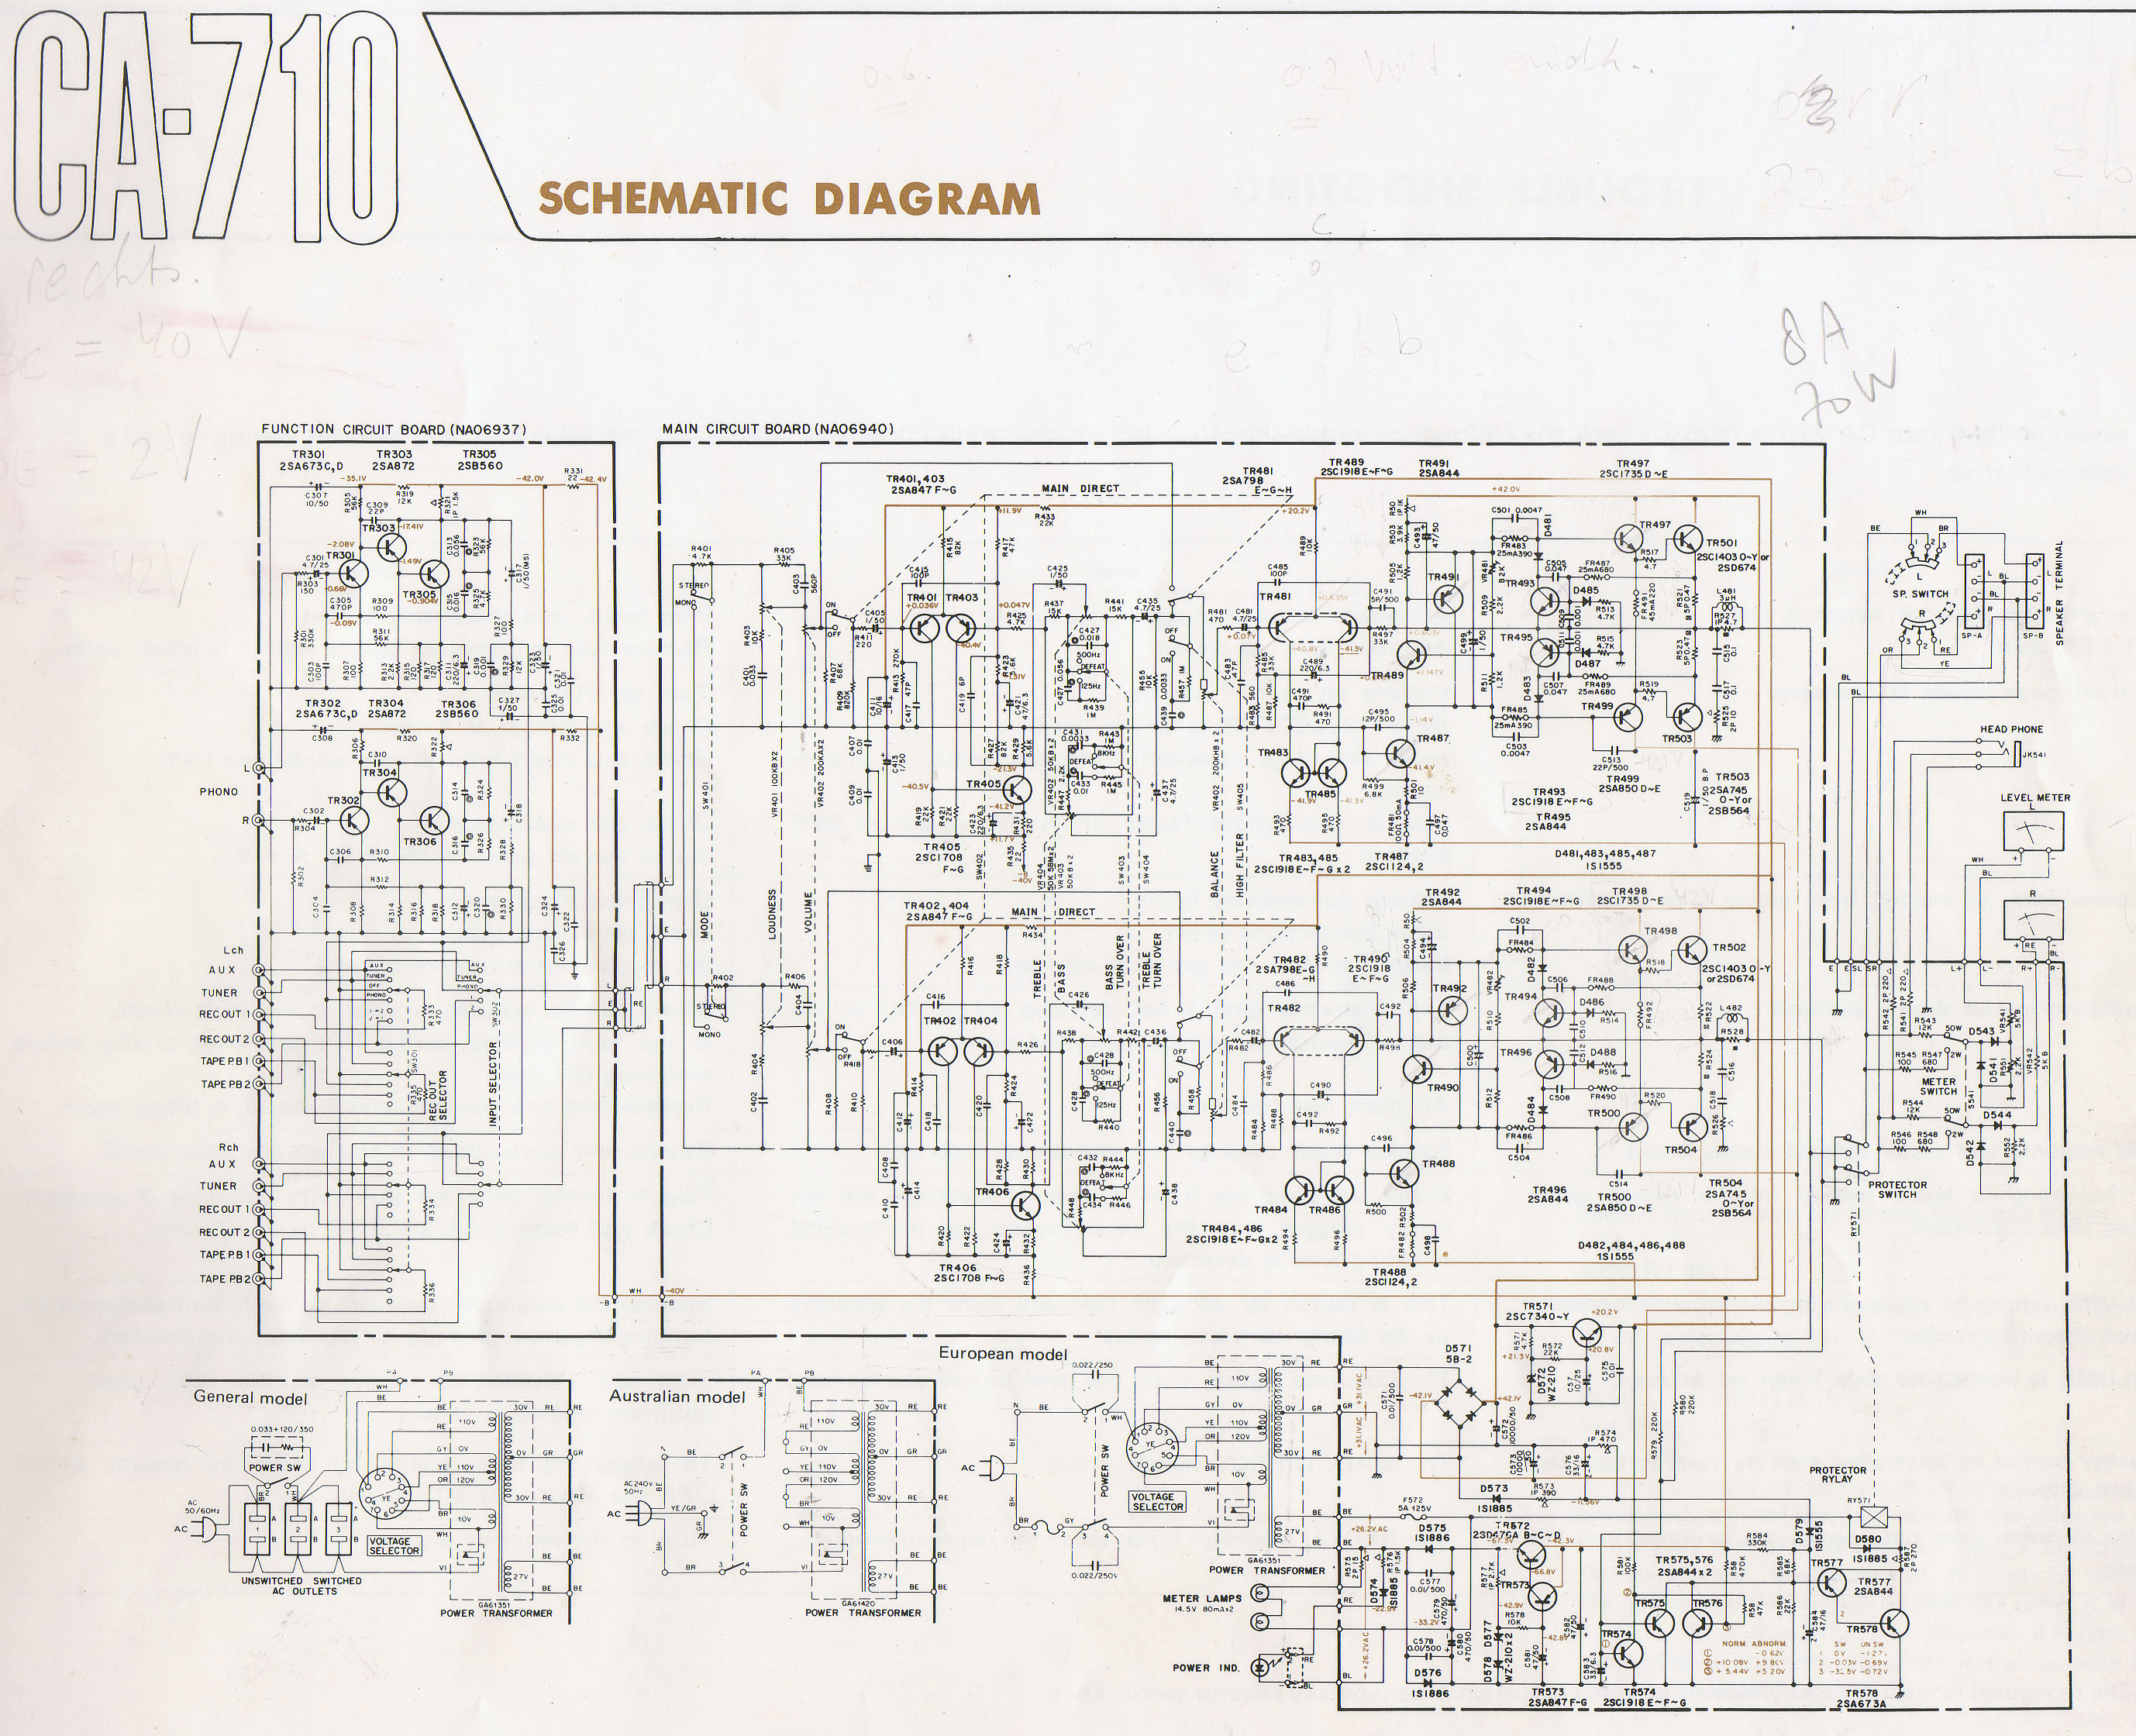 Yamaha CA-710 Part1: Blockdiagram
part2: Schematic